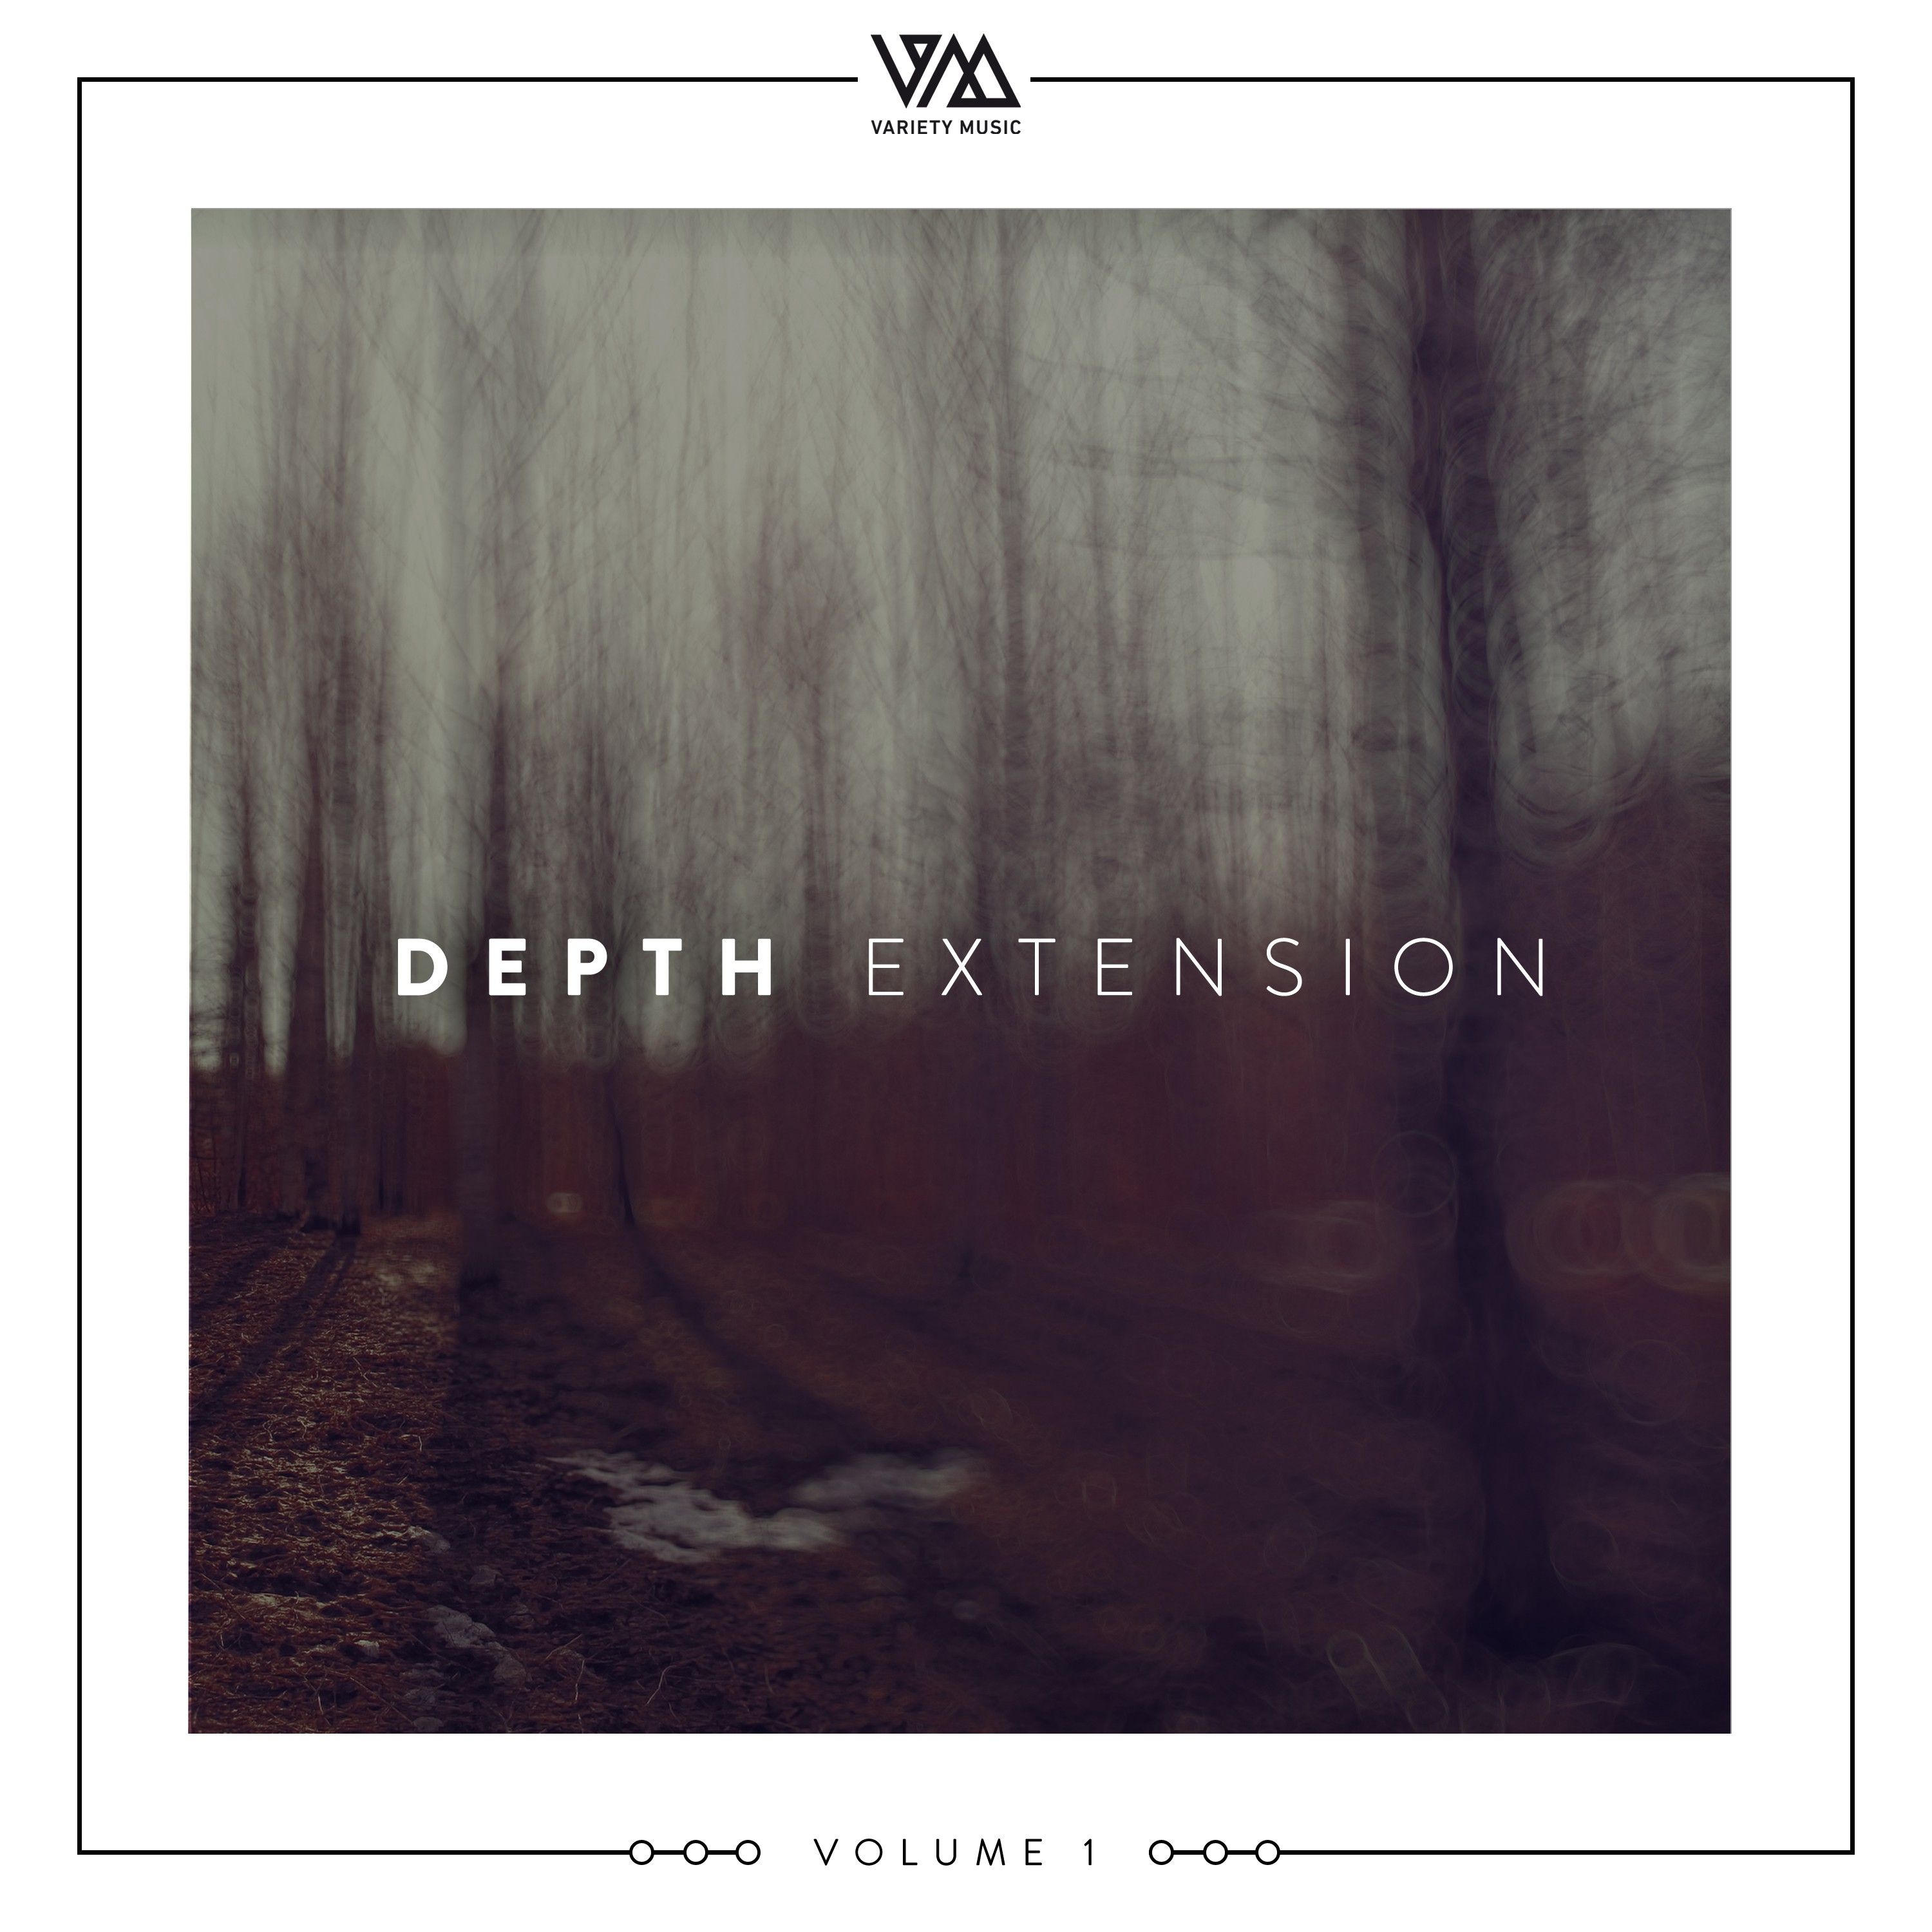 Depth Extension, Vol. 1